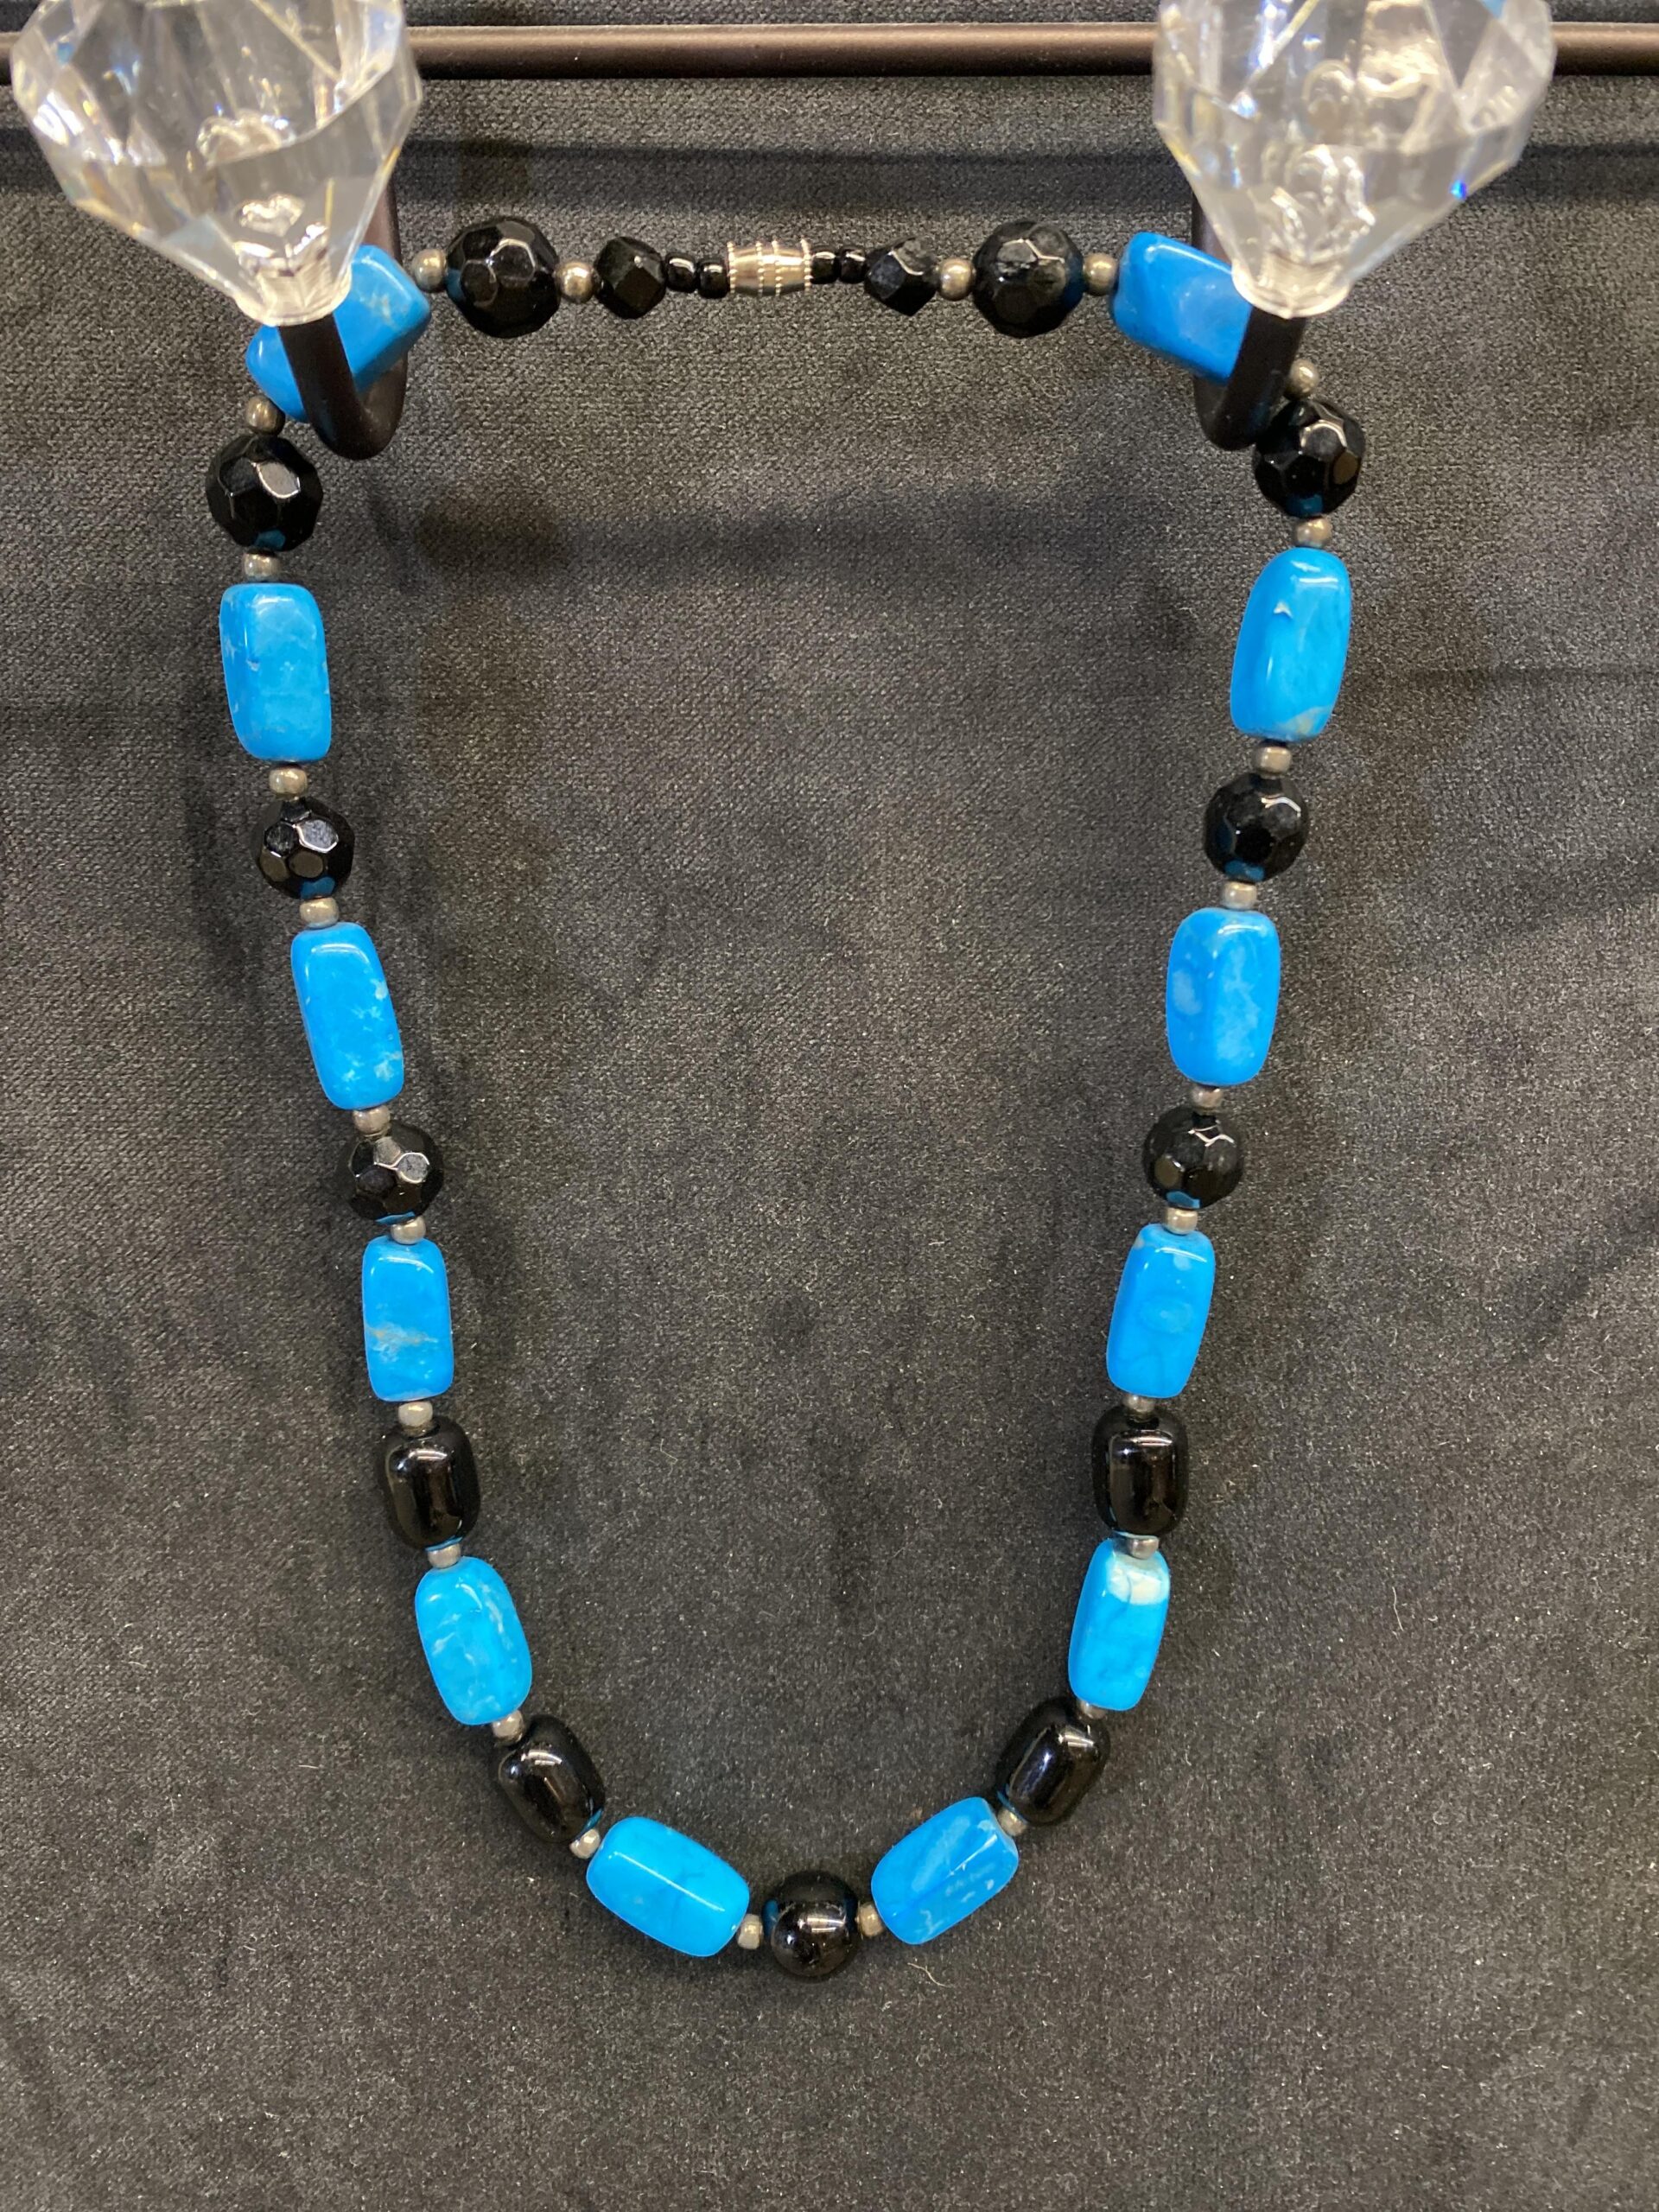 Stone Bead Necklace – Blue & Black